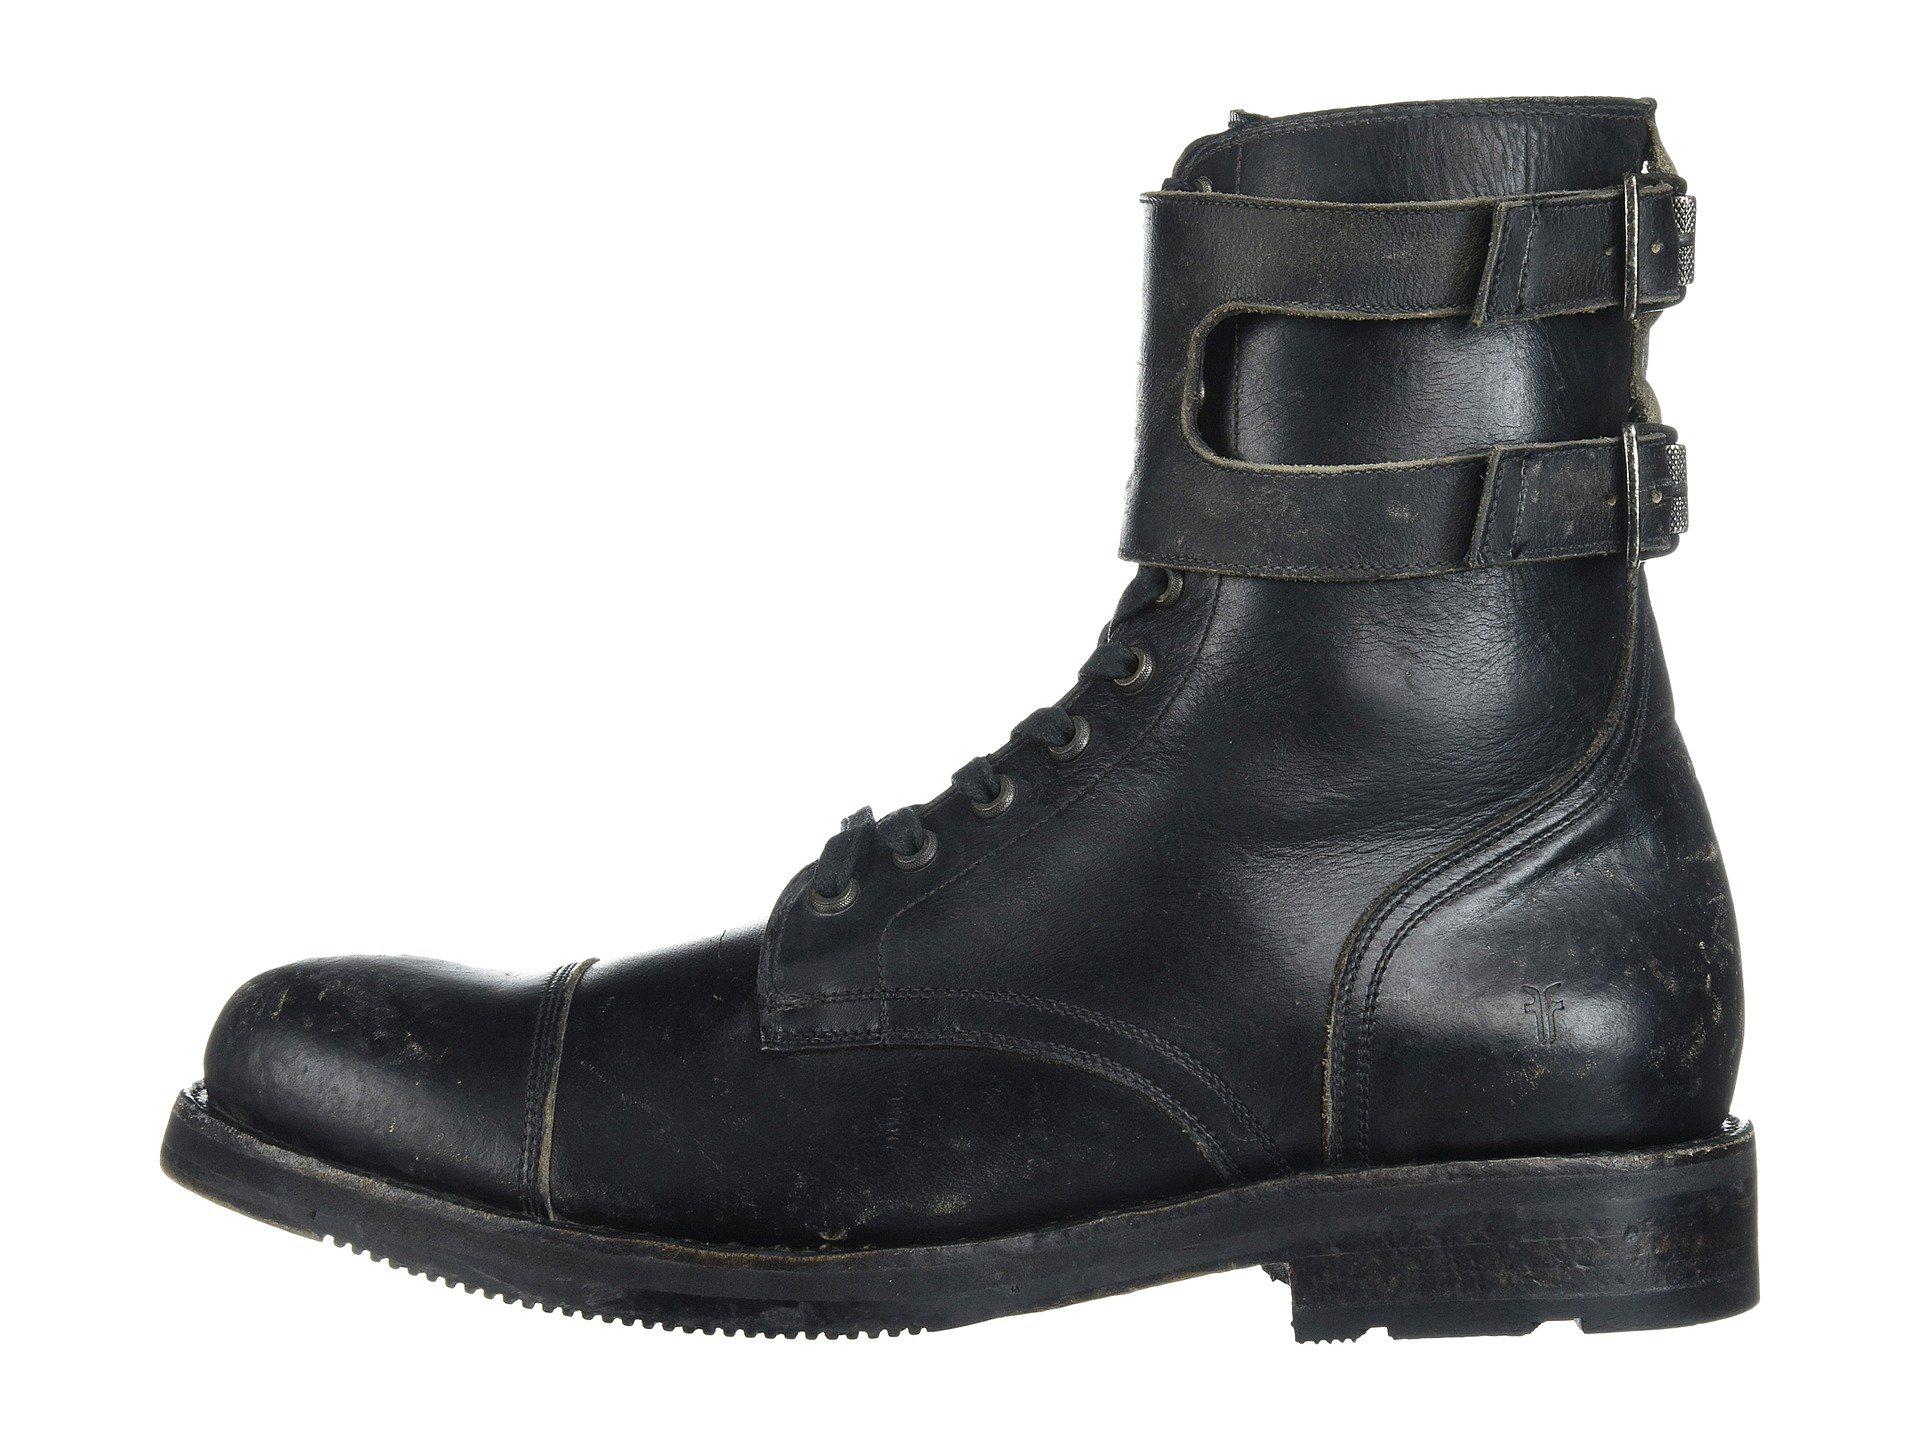 Frye Officer Cuff Boot in Black for Men - Lyst